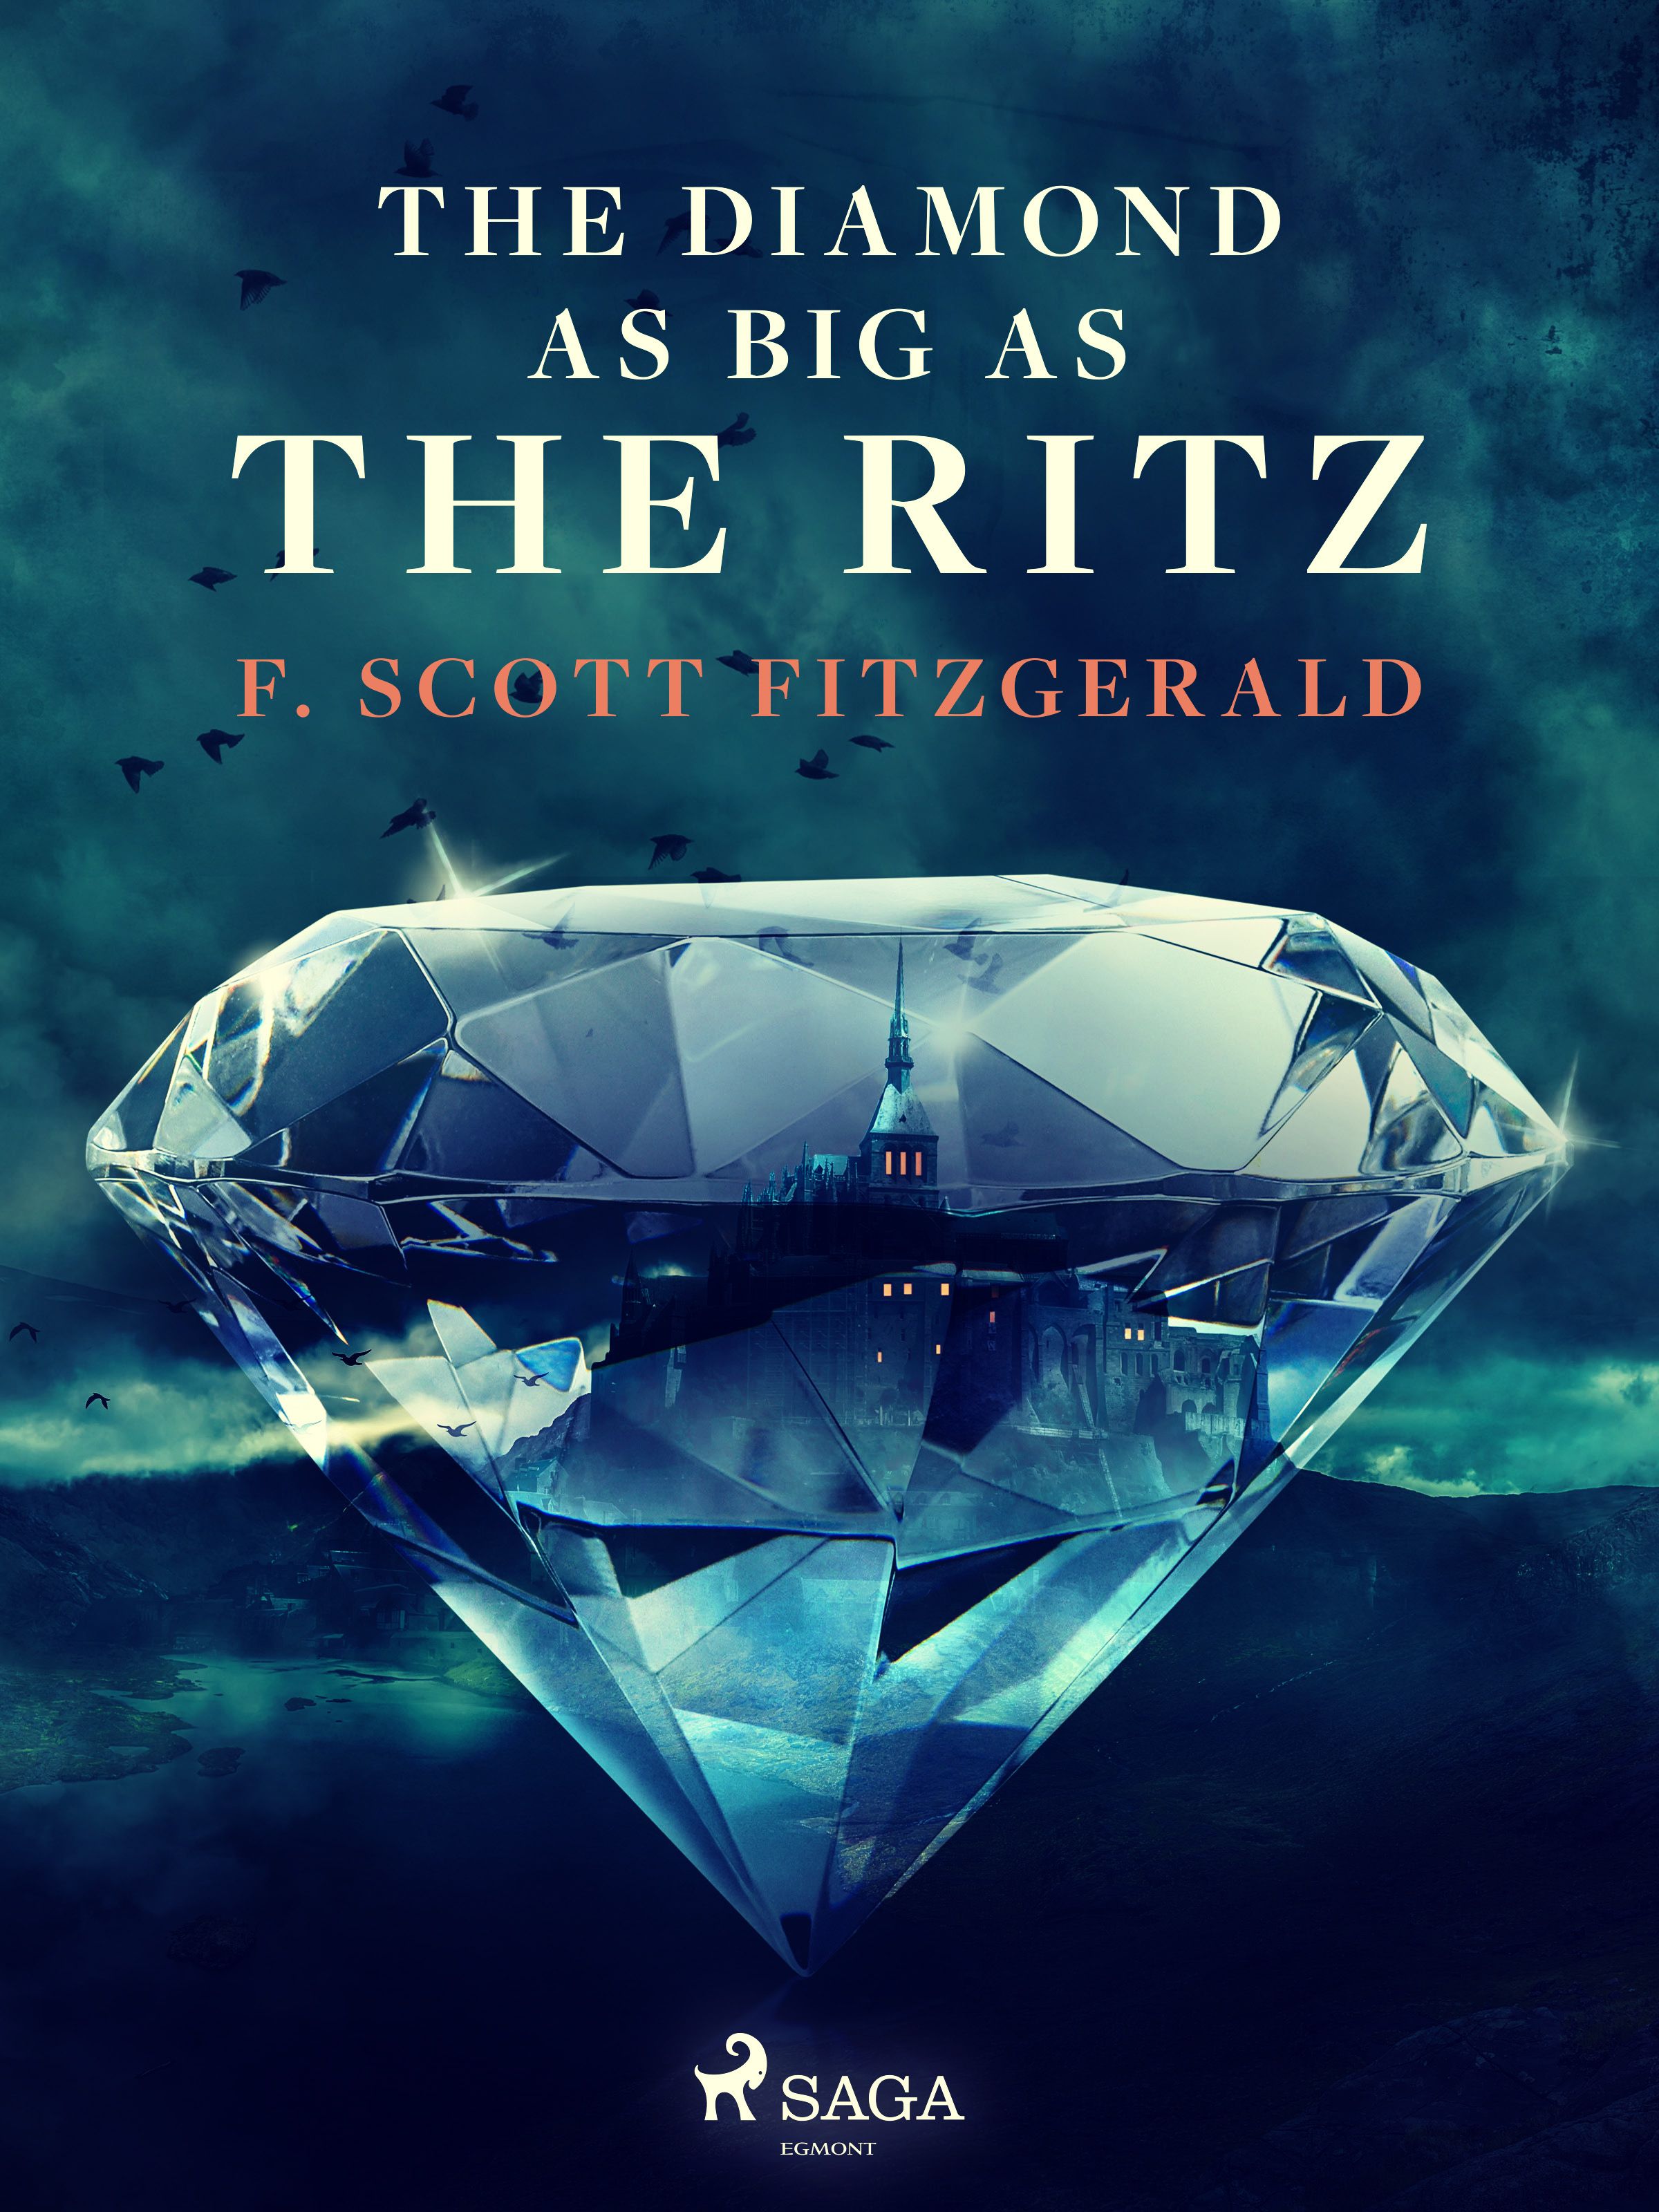 The Diamond as Big as the Ritz, e-bok av F. Scott. Fitzgerald